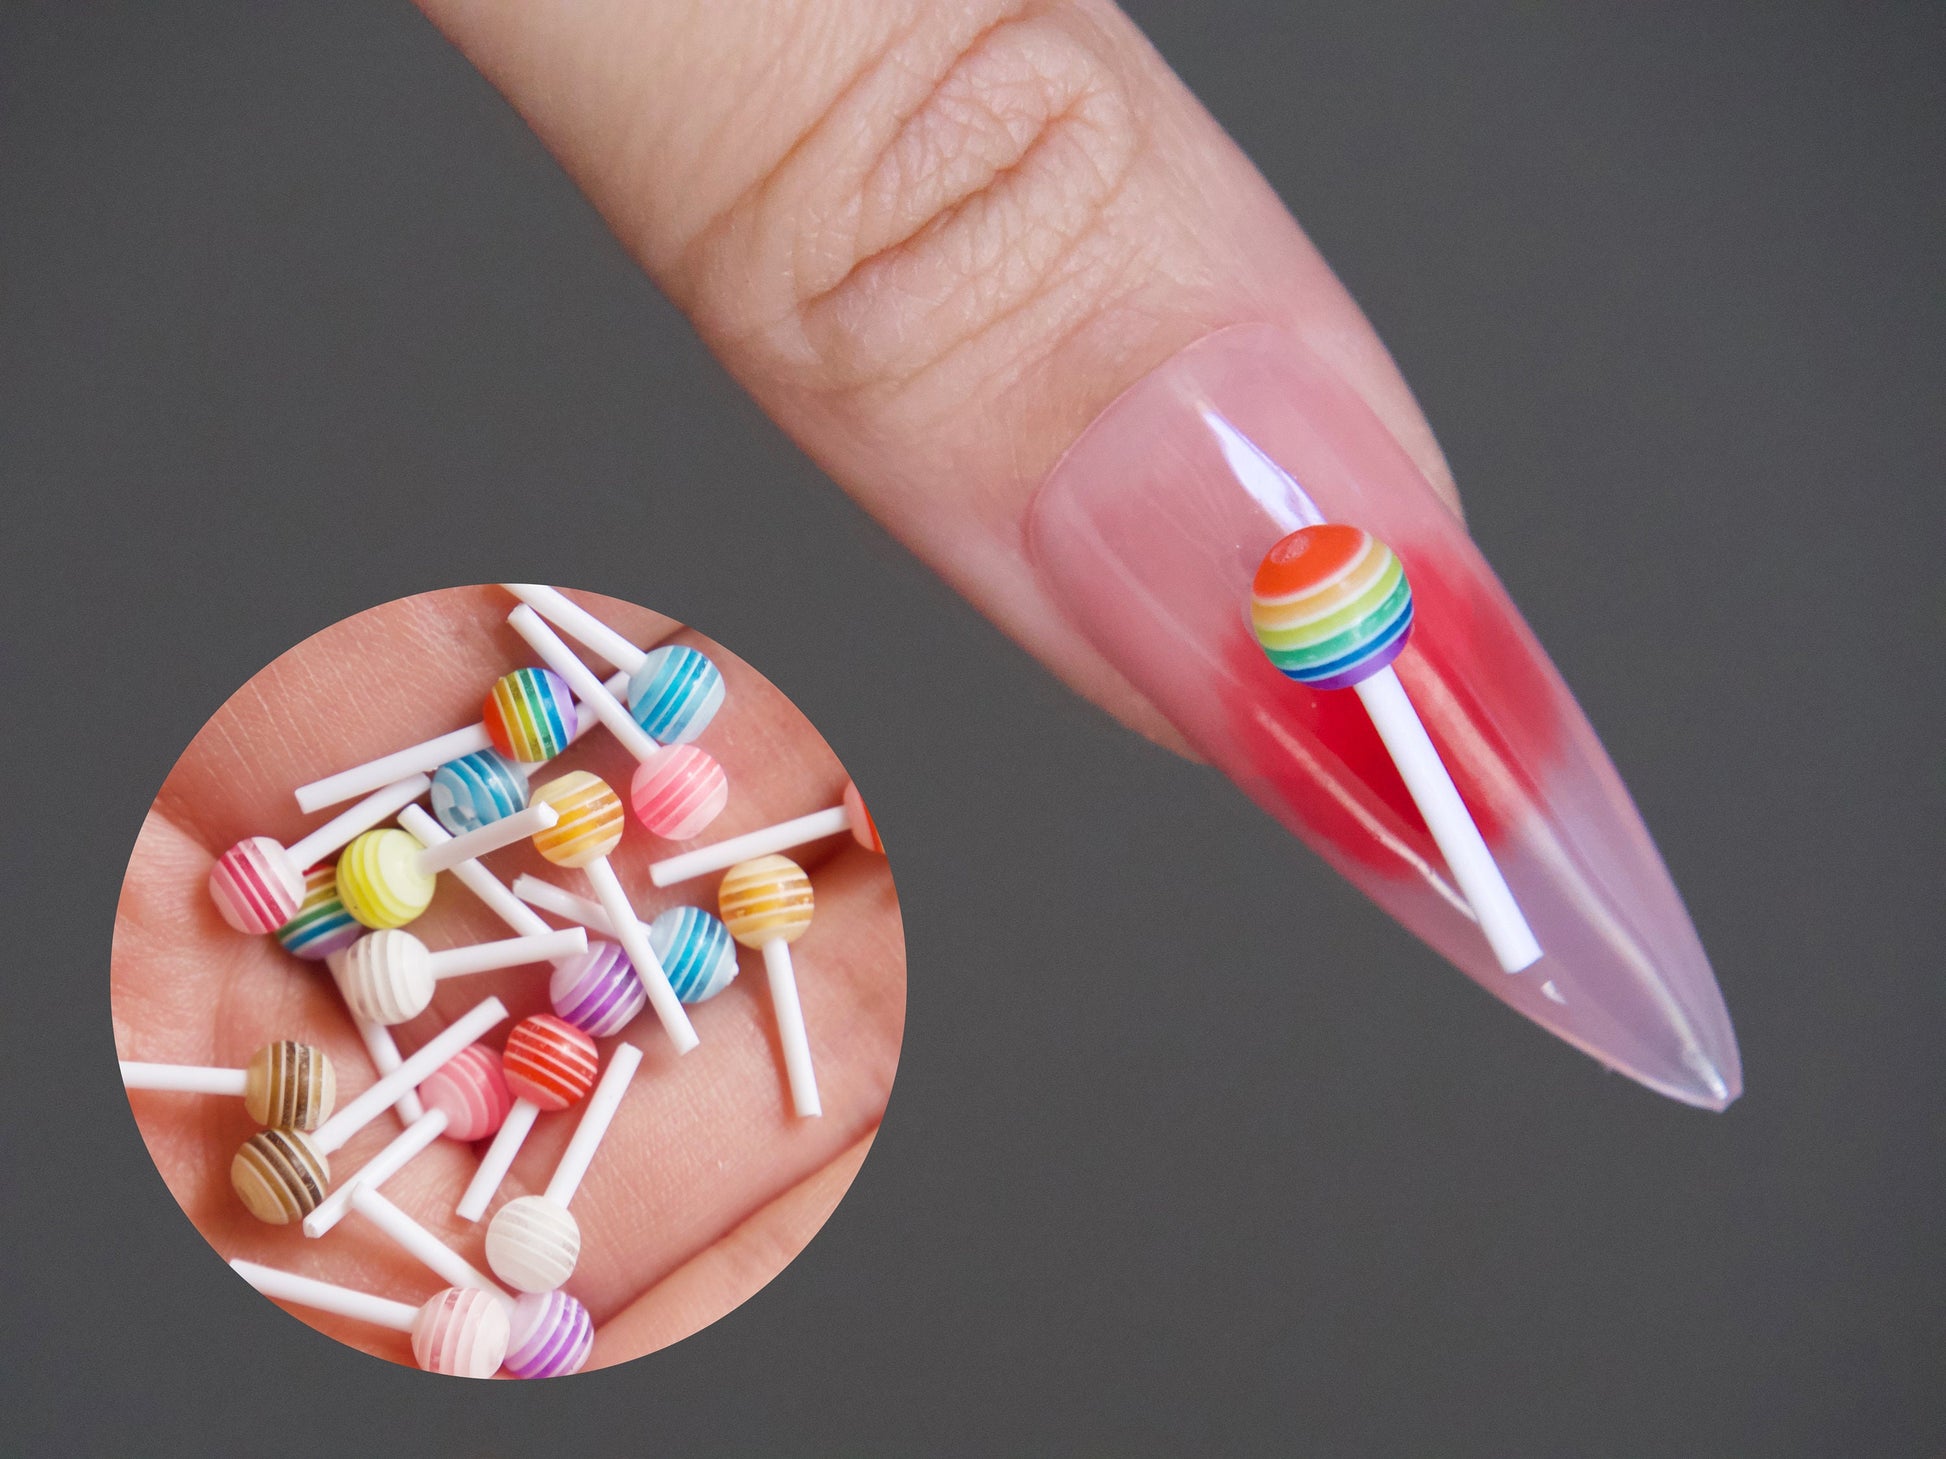 5Pcs Colorful 3D Candy Nail Charms Lollipop Resin Acrylic for DIY Nail Art  Decor